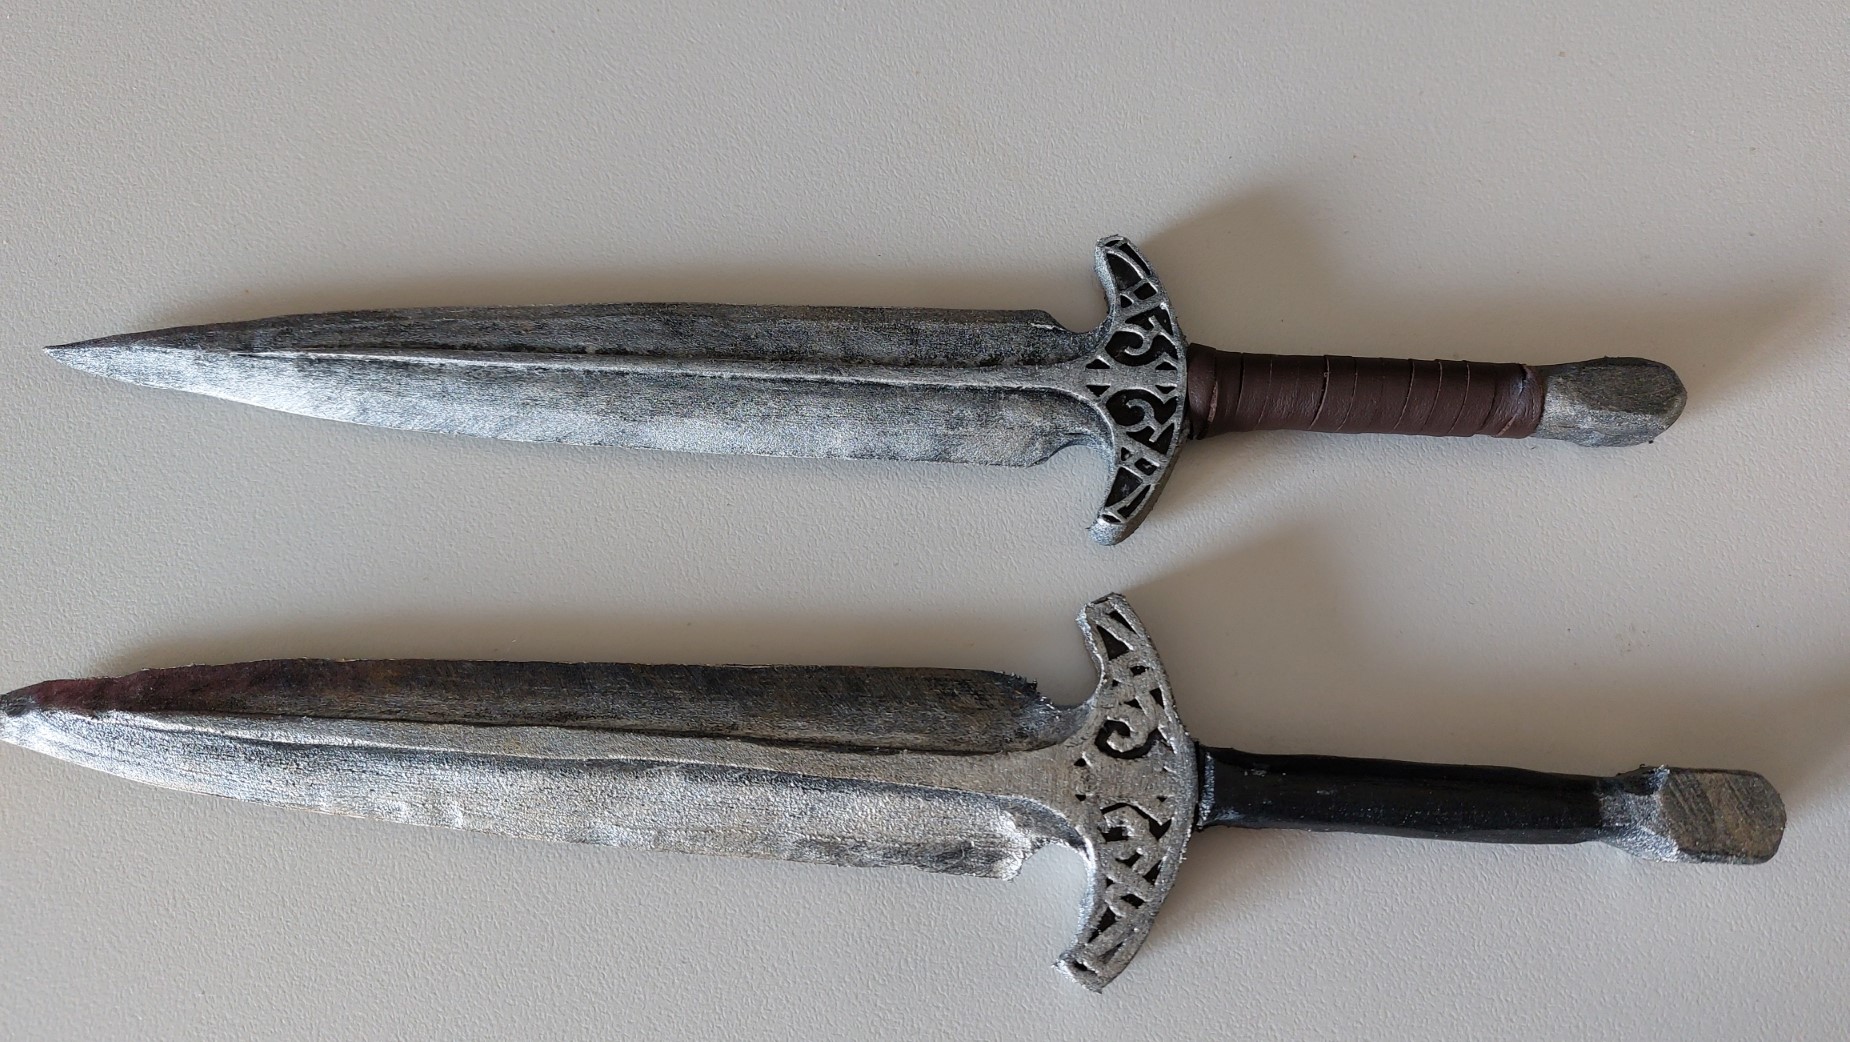 Daggers from Skyrim